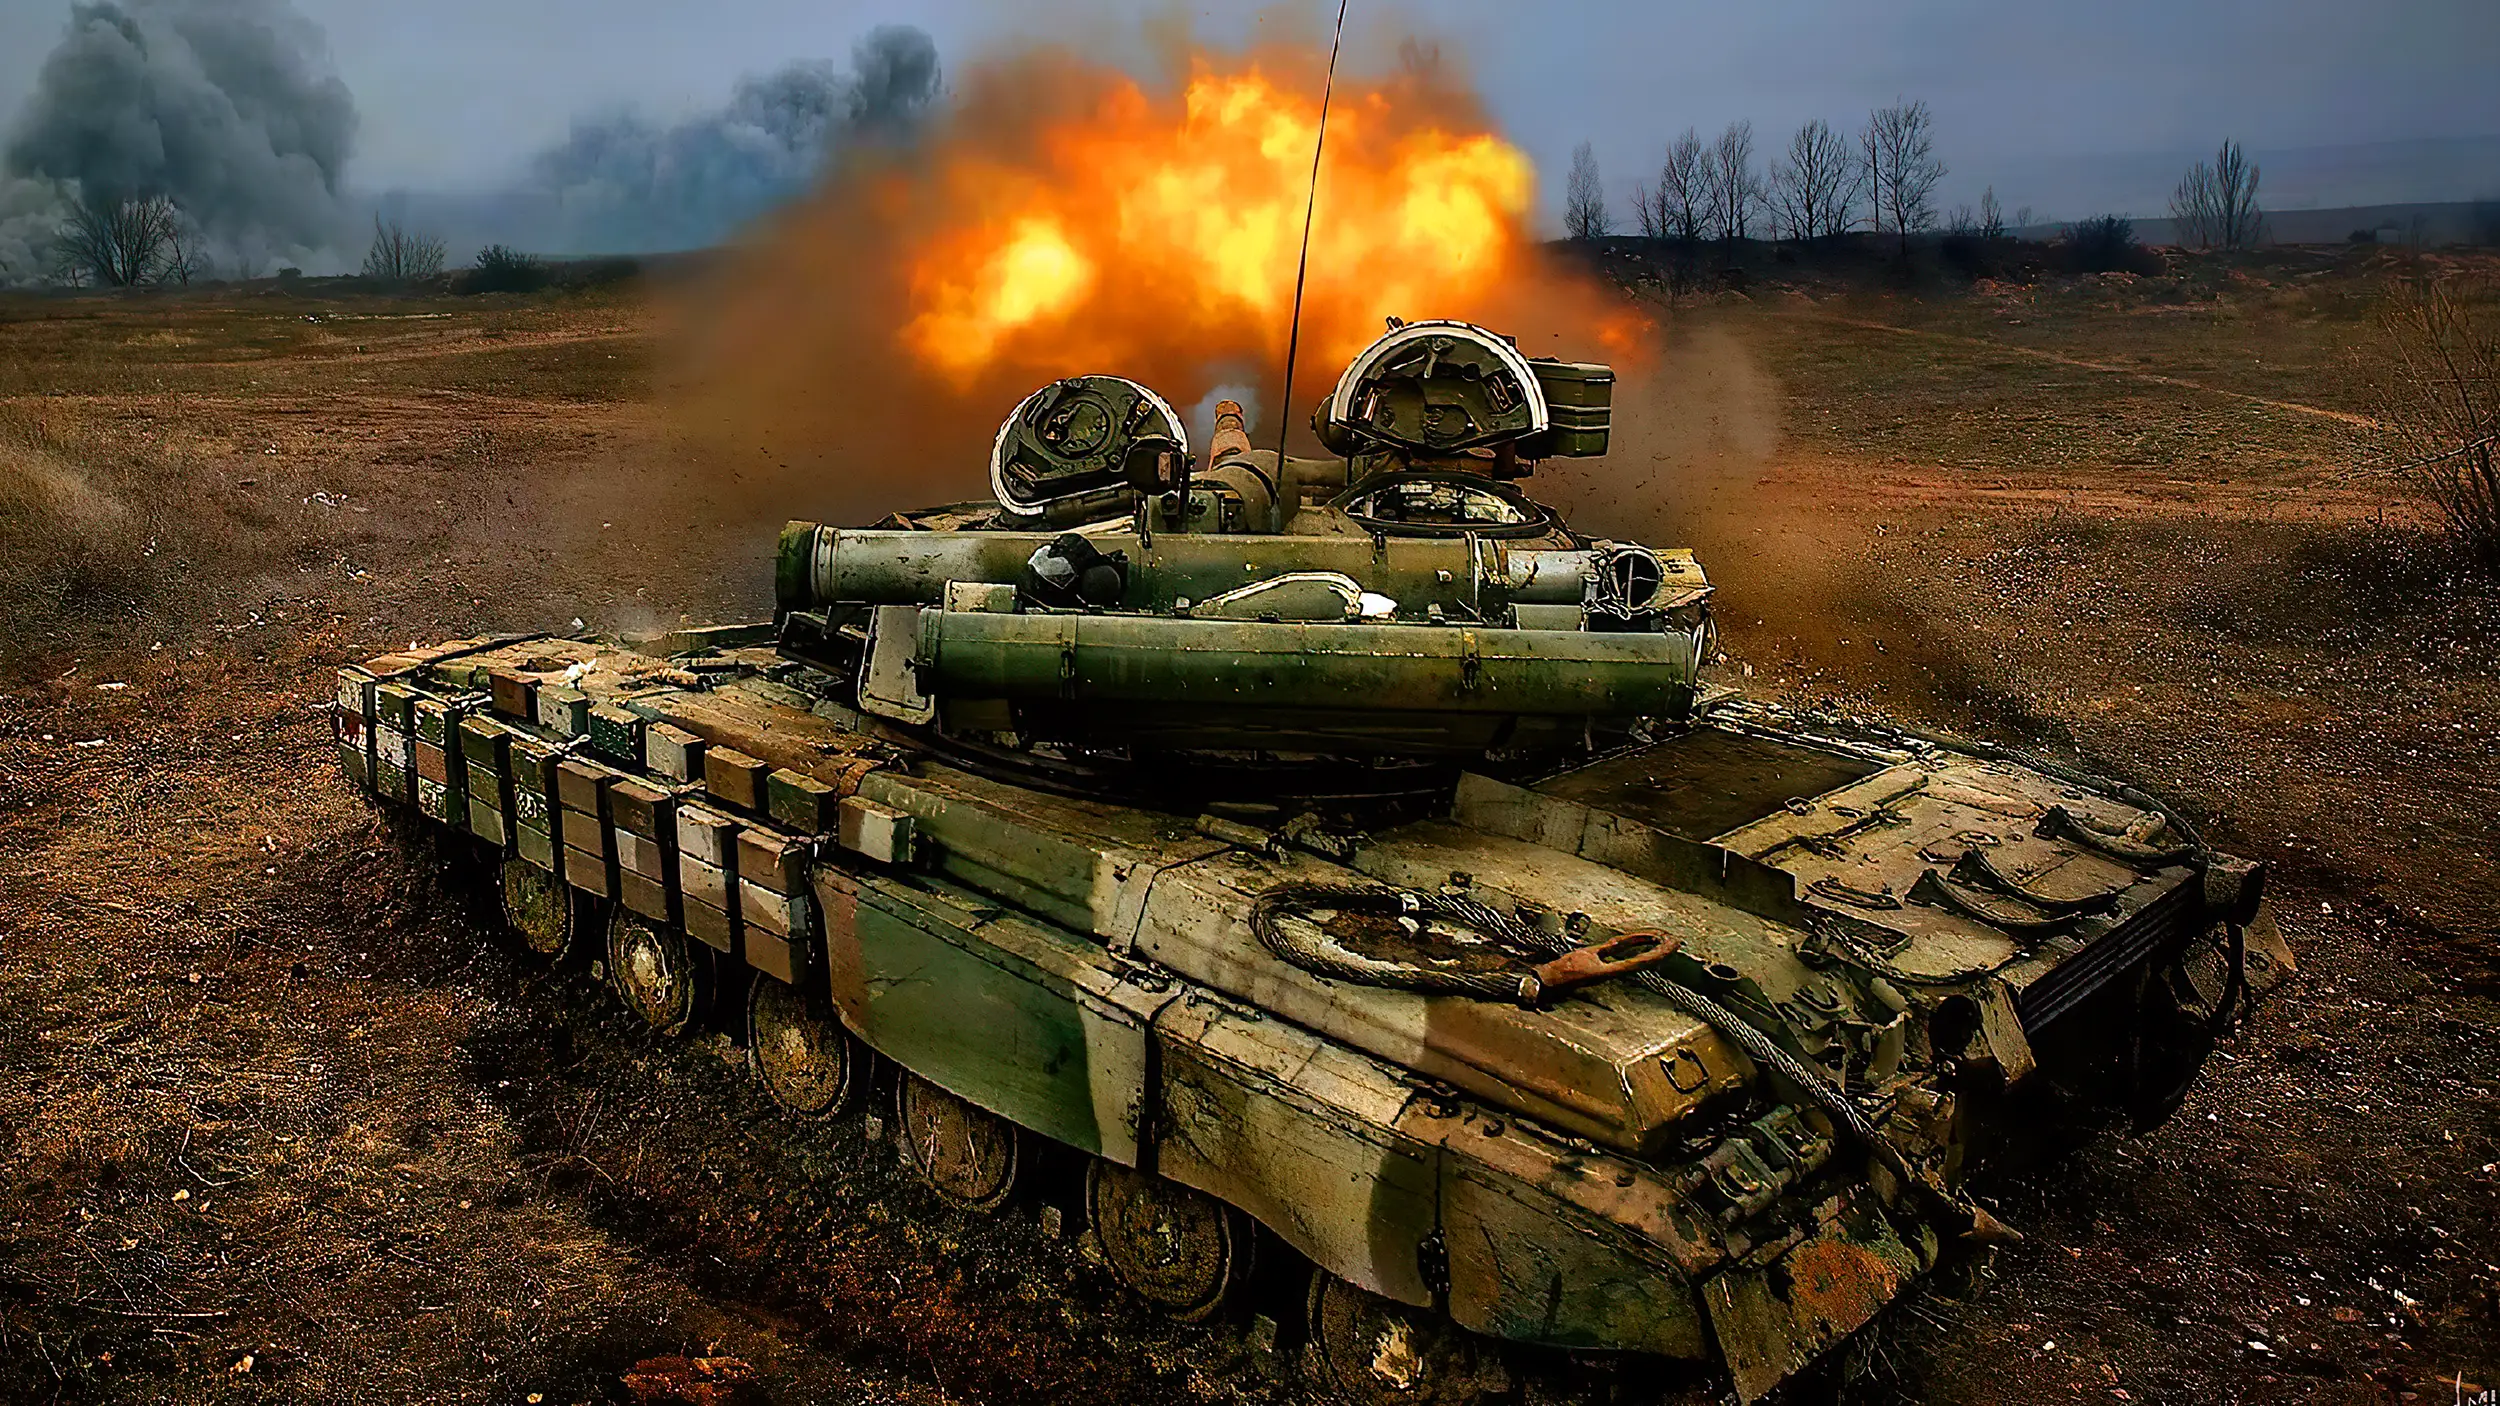 Tanques del Ejército de Ucrania en combate. Crédito de la imagen: Creative Commons